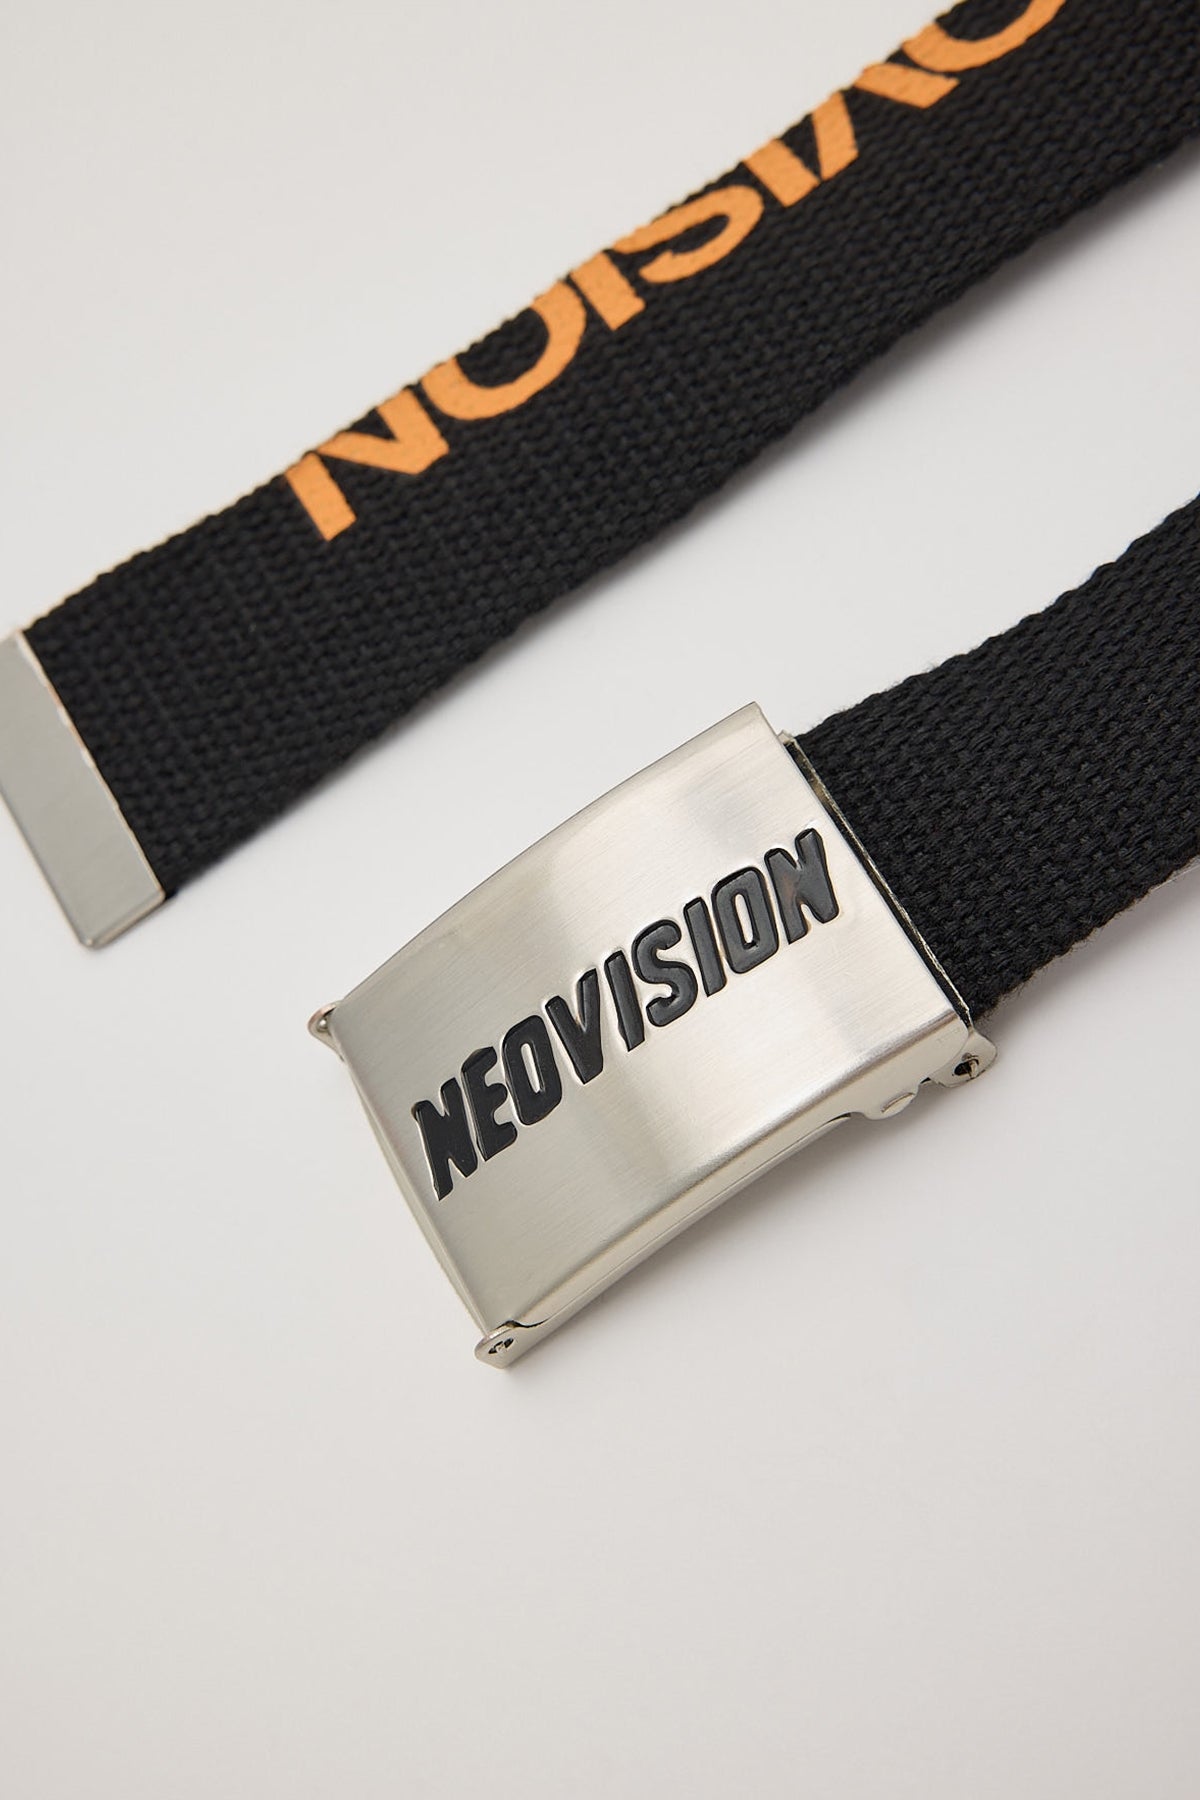 Neovision Loop Web Belt Black/Orange